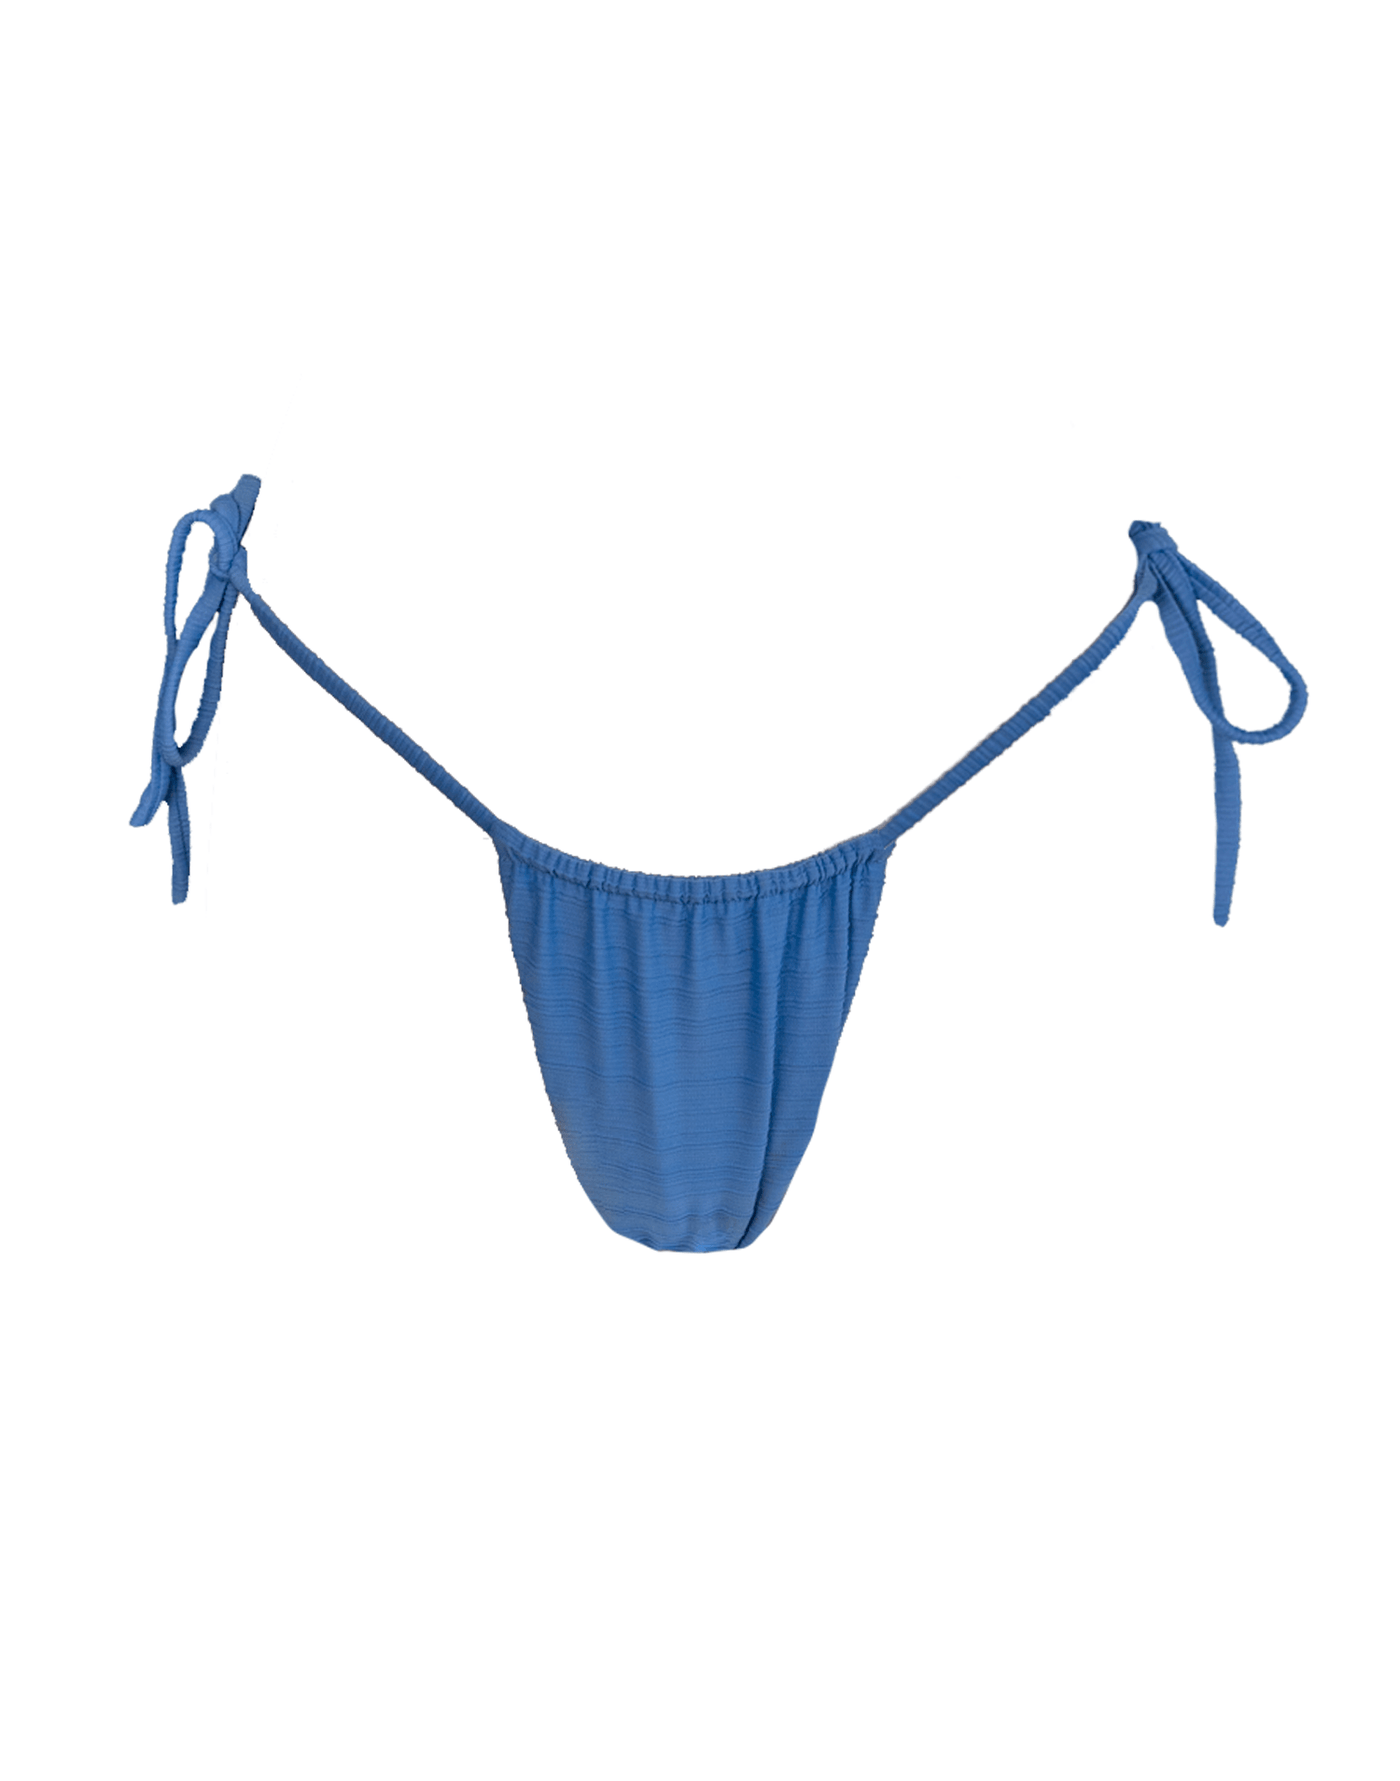 Quartz Side Tie Bottom (Blue) - Cheeky Side Tie Bikini Bottom - Women's Swim - Charcoal Clothing mix-and-match